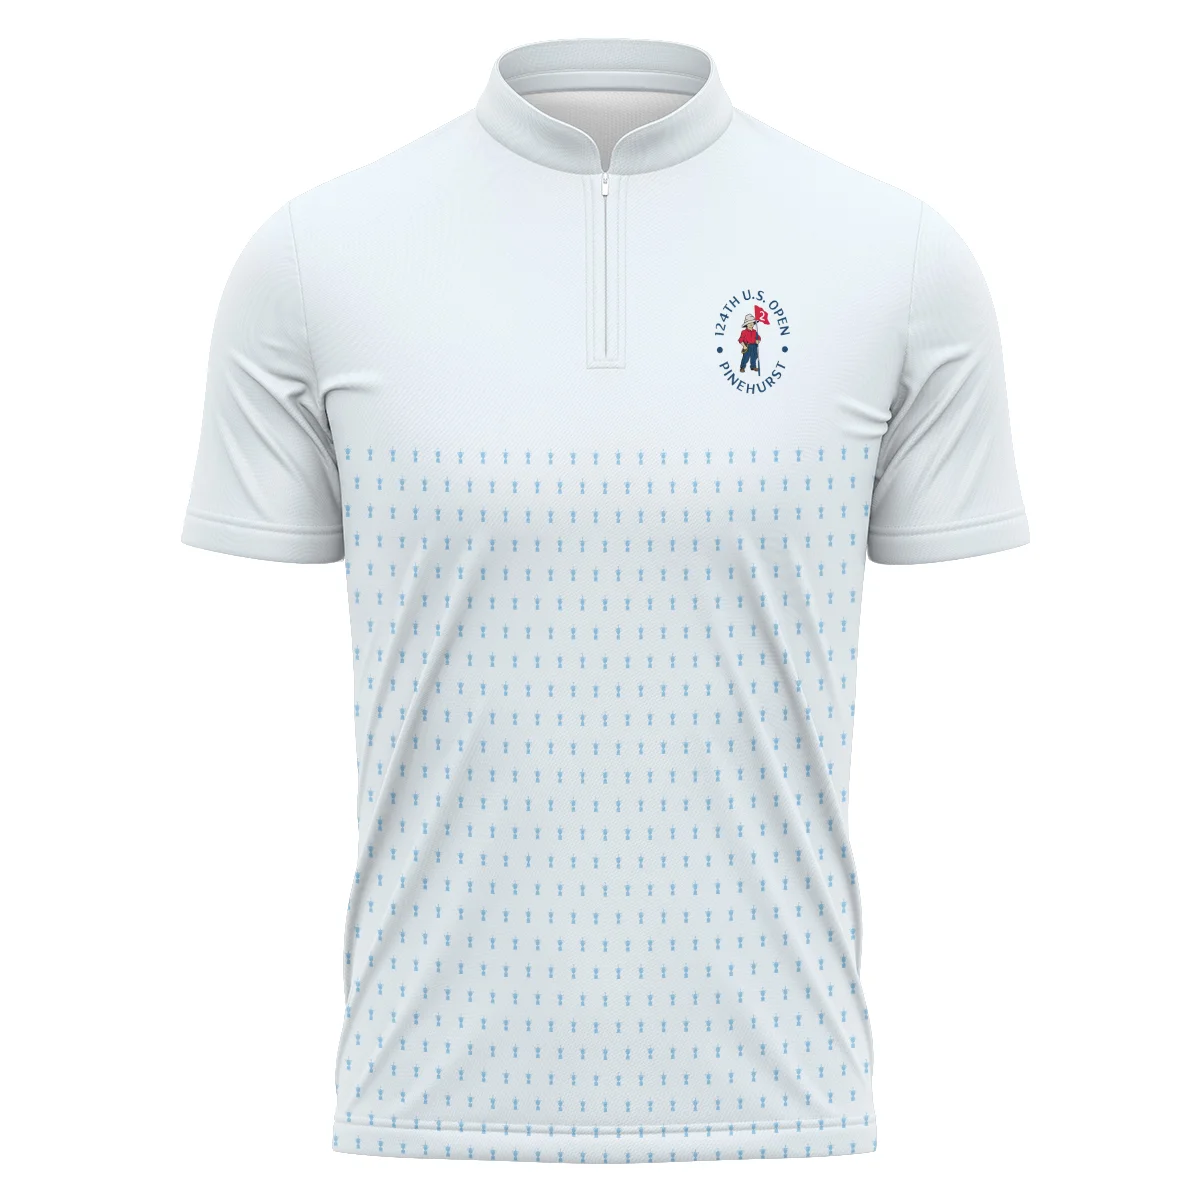 U.S Open Trophy Pattern Light Blue 124th U.S. Open Pinehurst Titleist Polo Shirt Style Classic Polo Shirt For Men